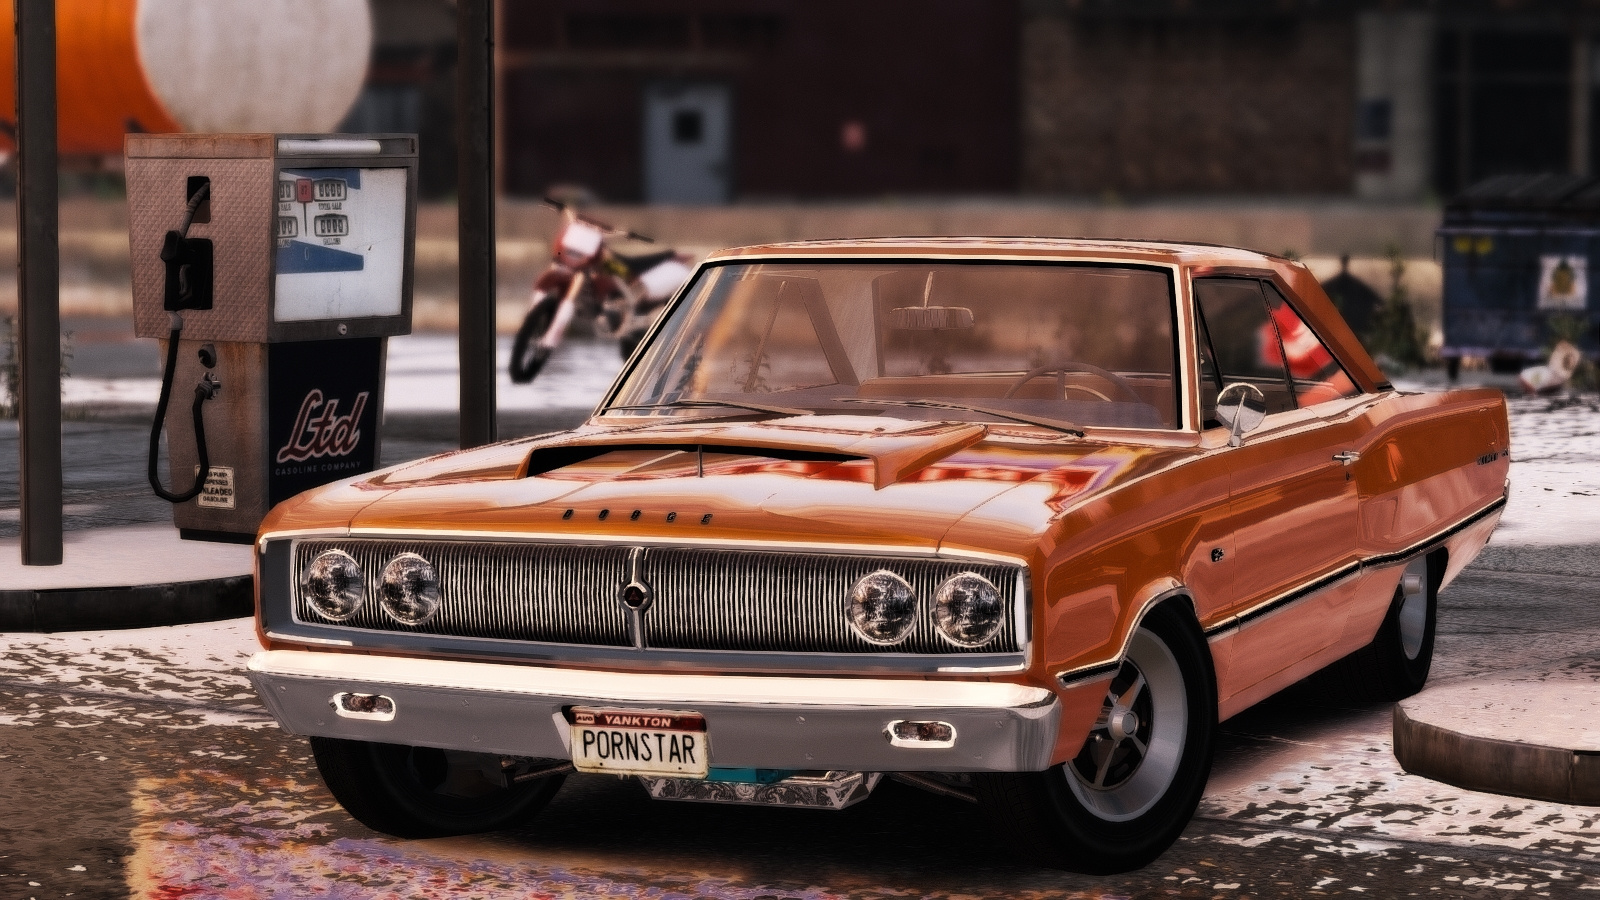 60 Impala lowrider - WIP: Model Cars - Model Cars Magazine Forum